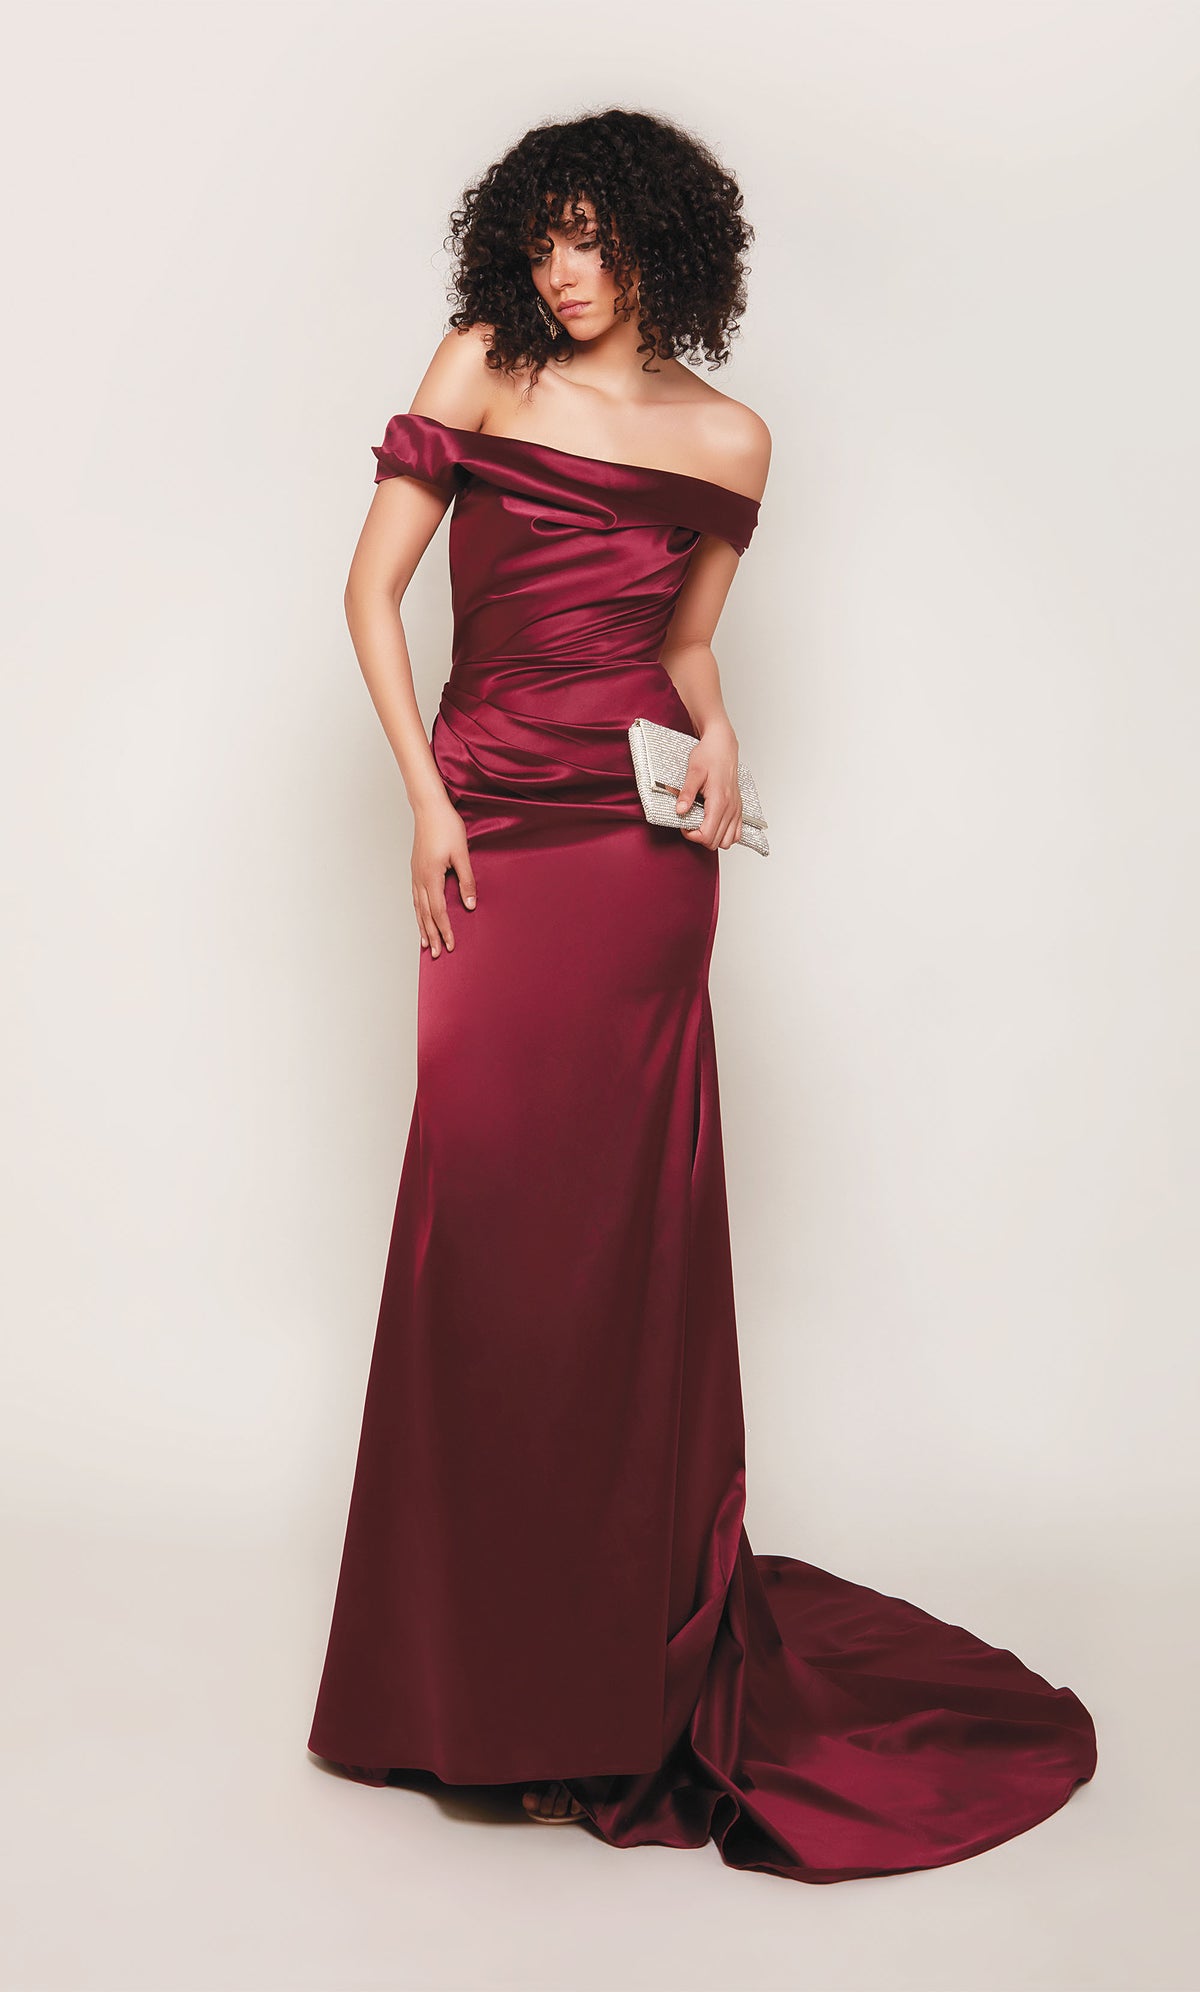 Off the shoulder, duchess satin wedding dress in burgundy. Color-SWATCH_7064__BURGUNDY